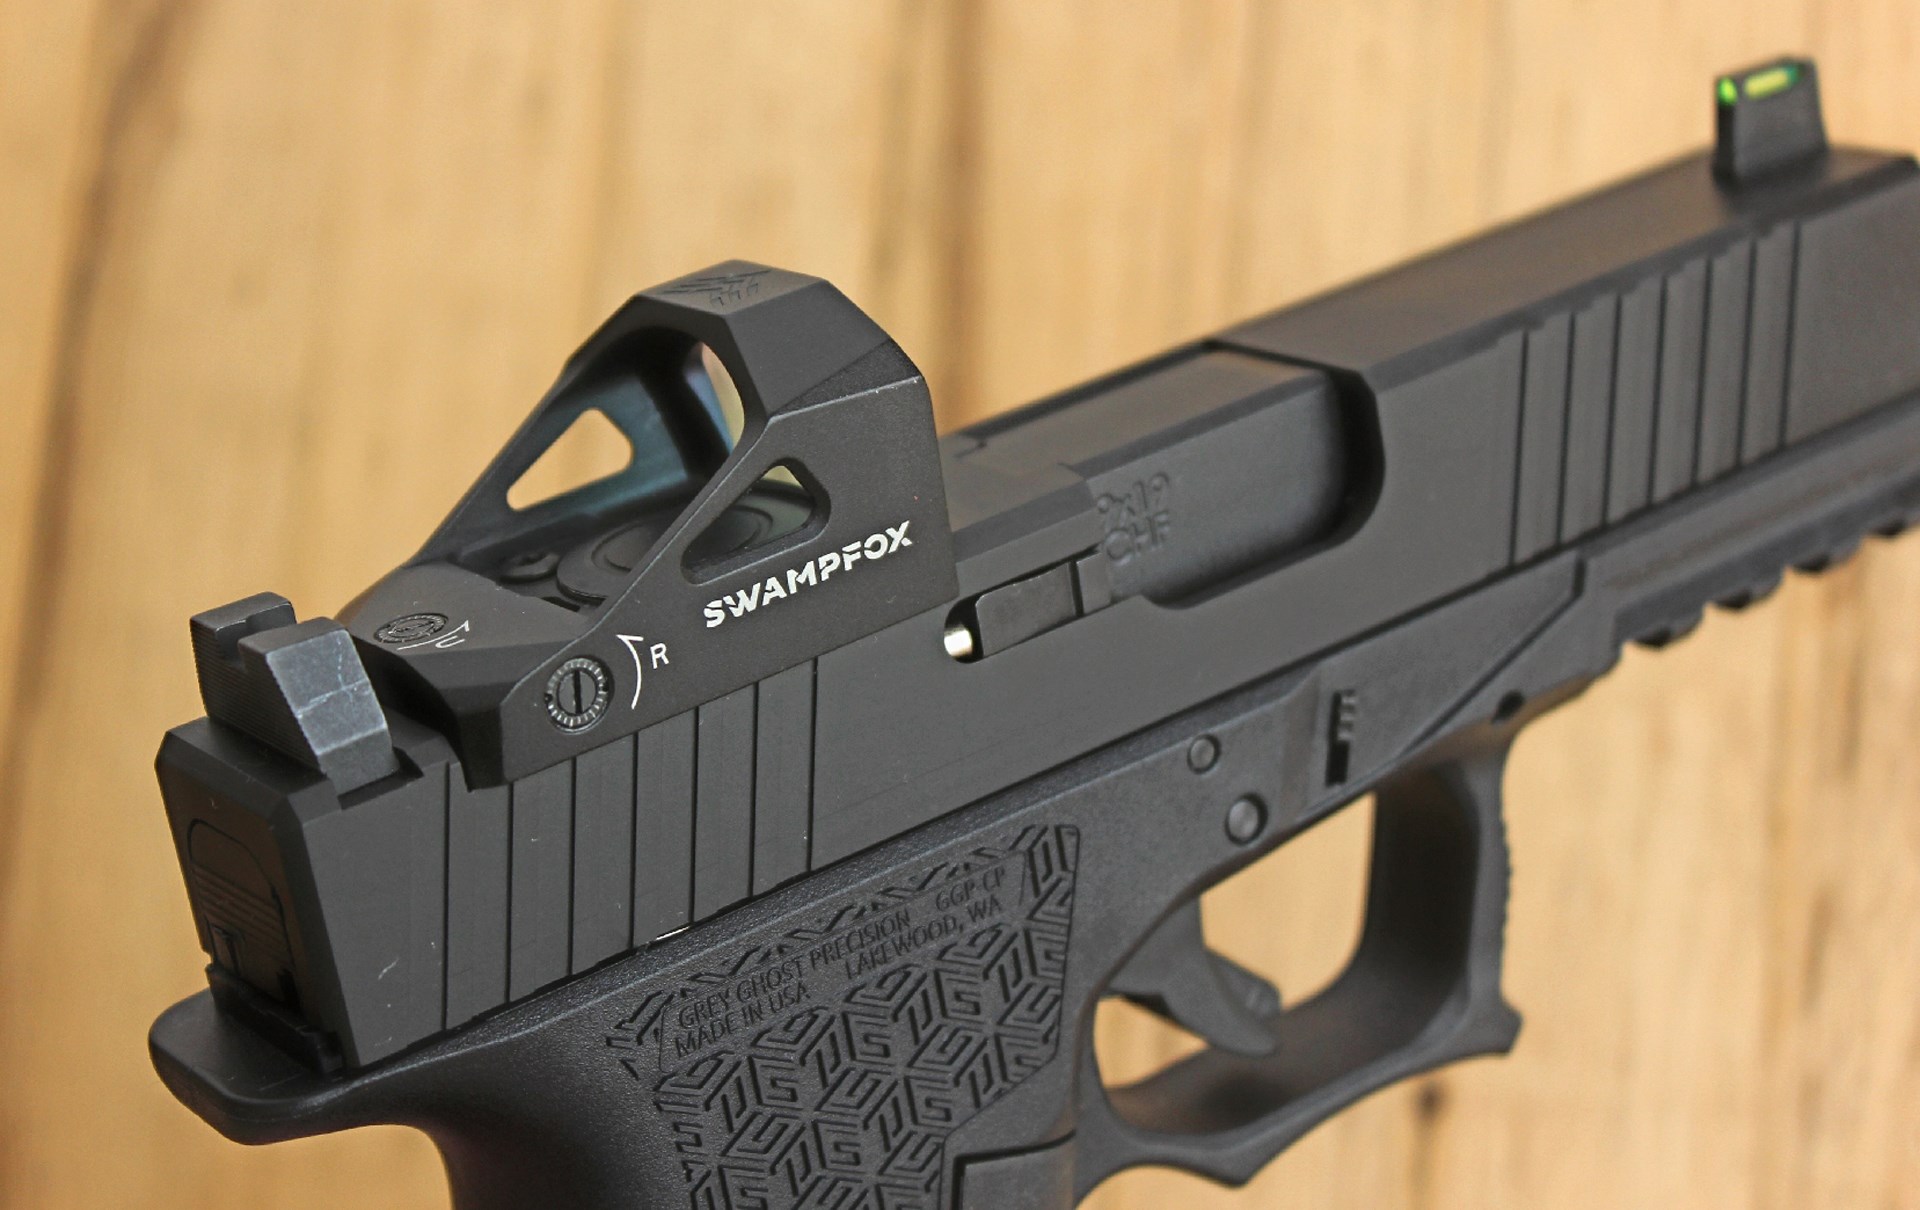 Swampfox red-dot optic shown on a black handgun wood background